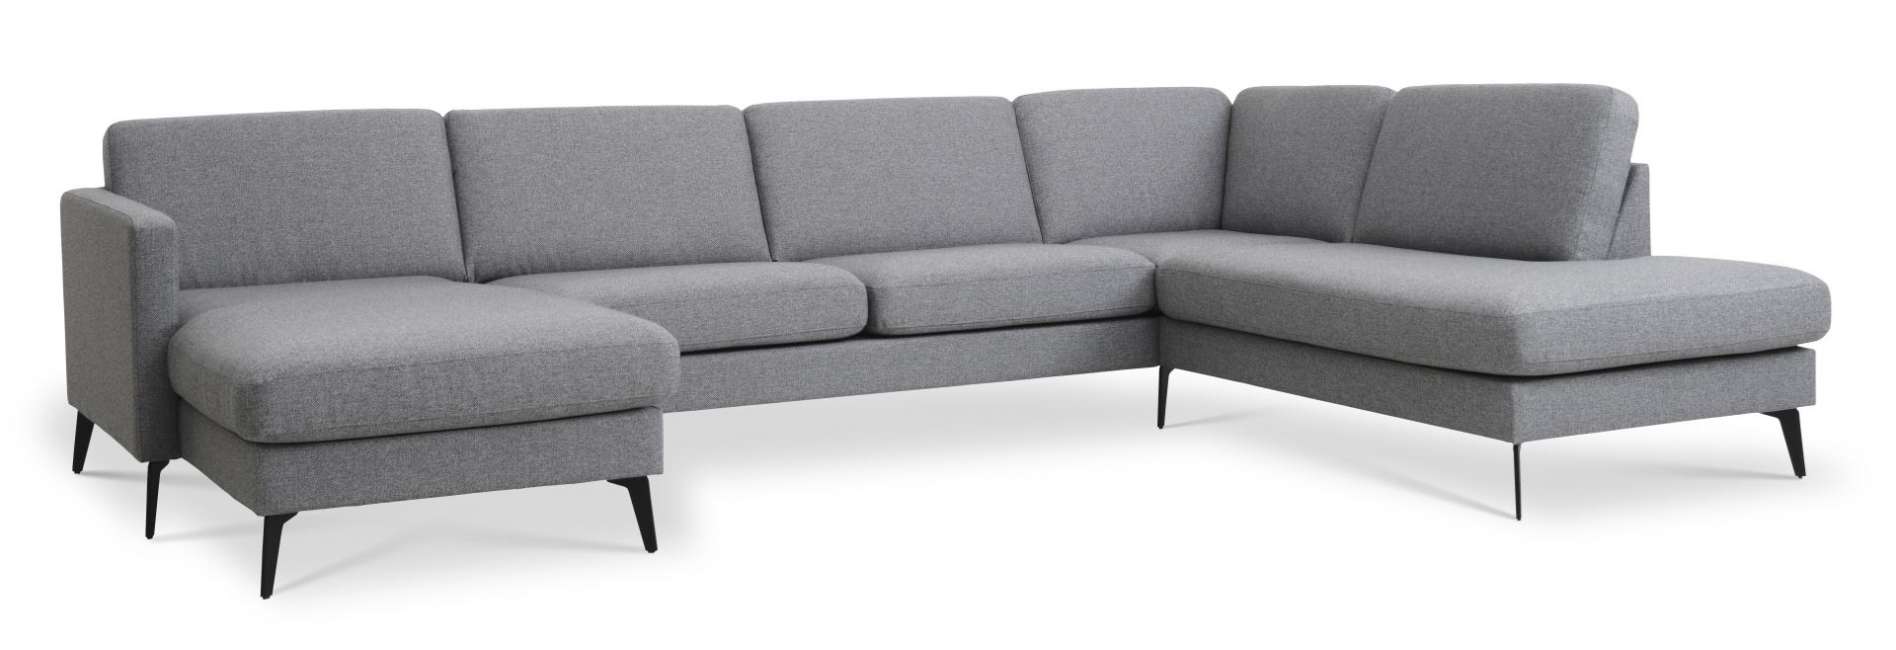 Priser på Ask sæt 55 U OE sofa, m. højre chaiselong - lys granitgrå polyester stof og Eiffel ben